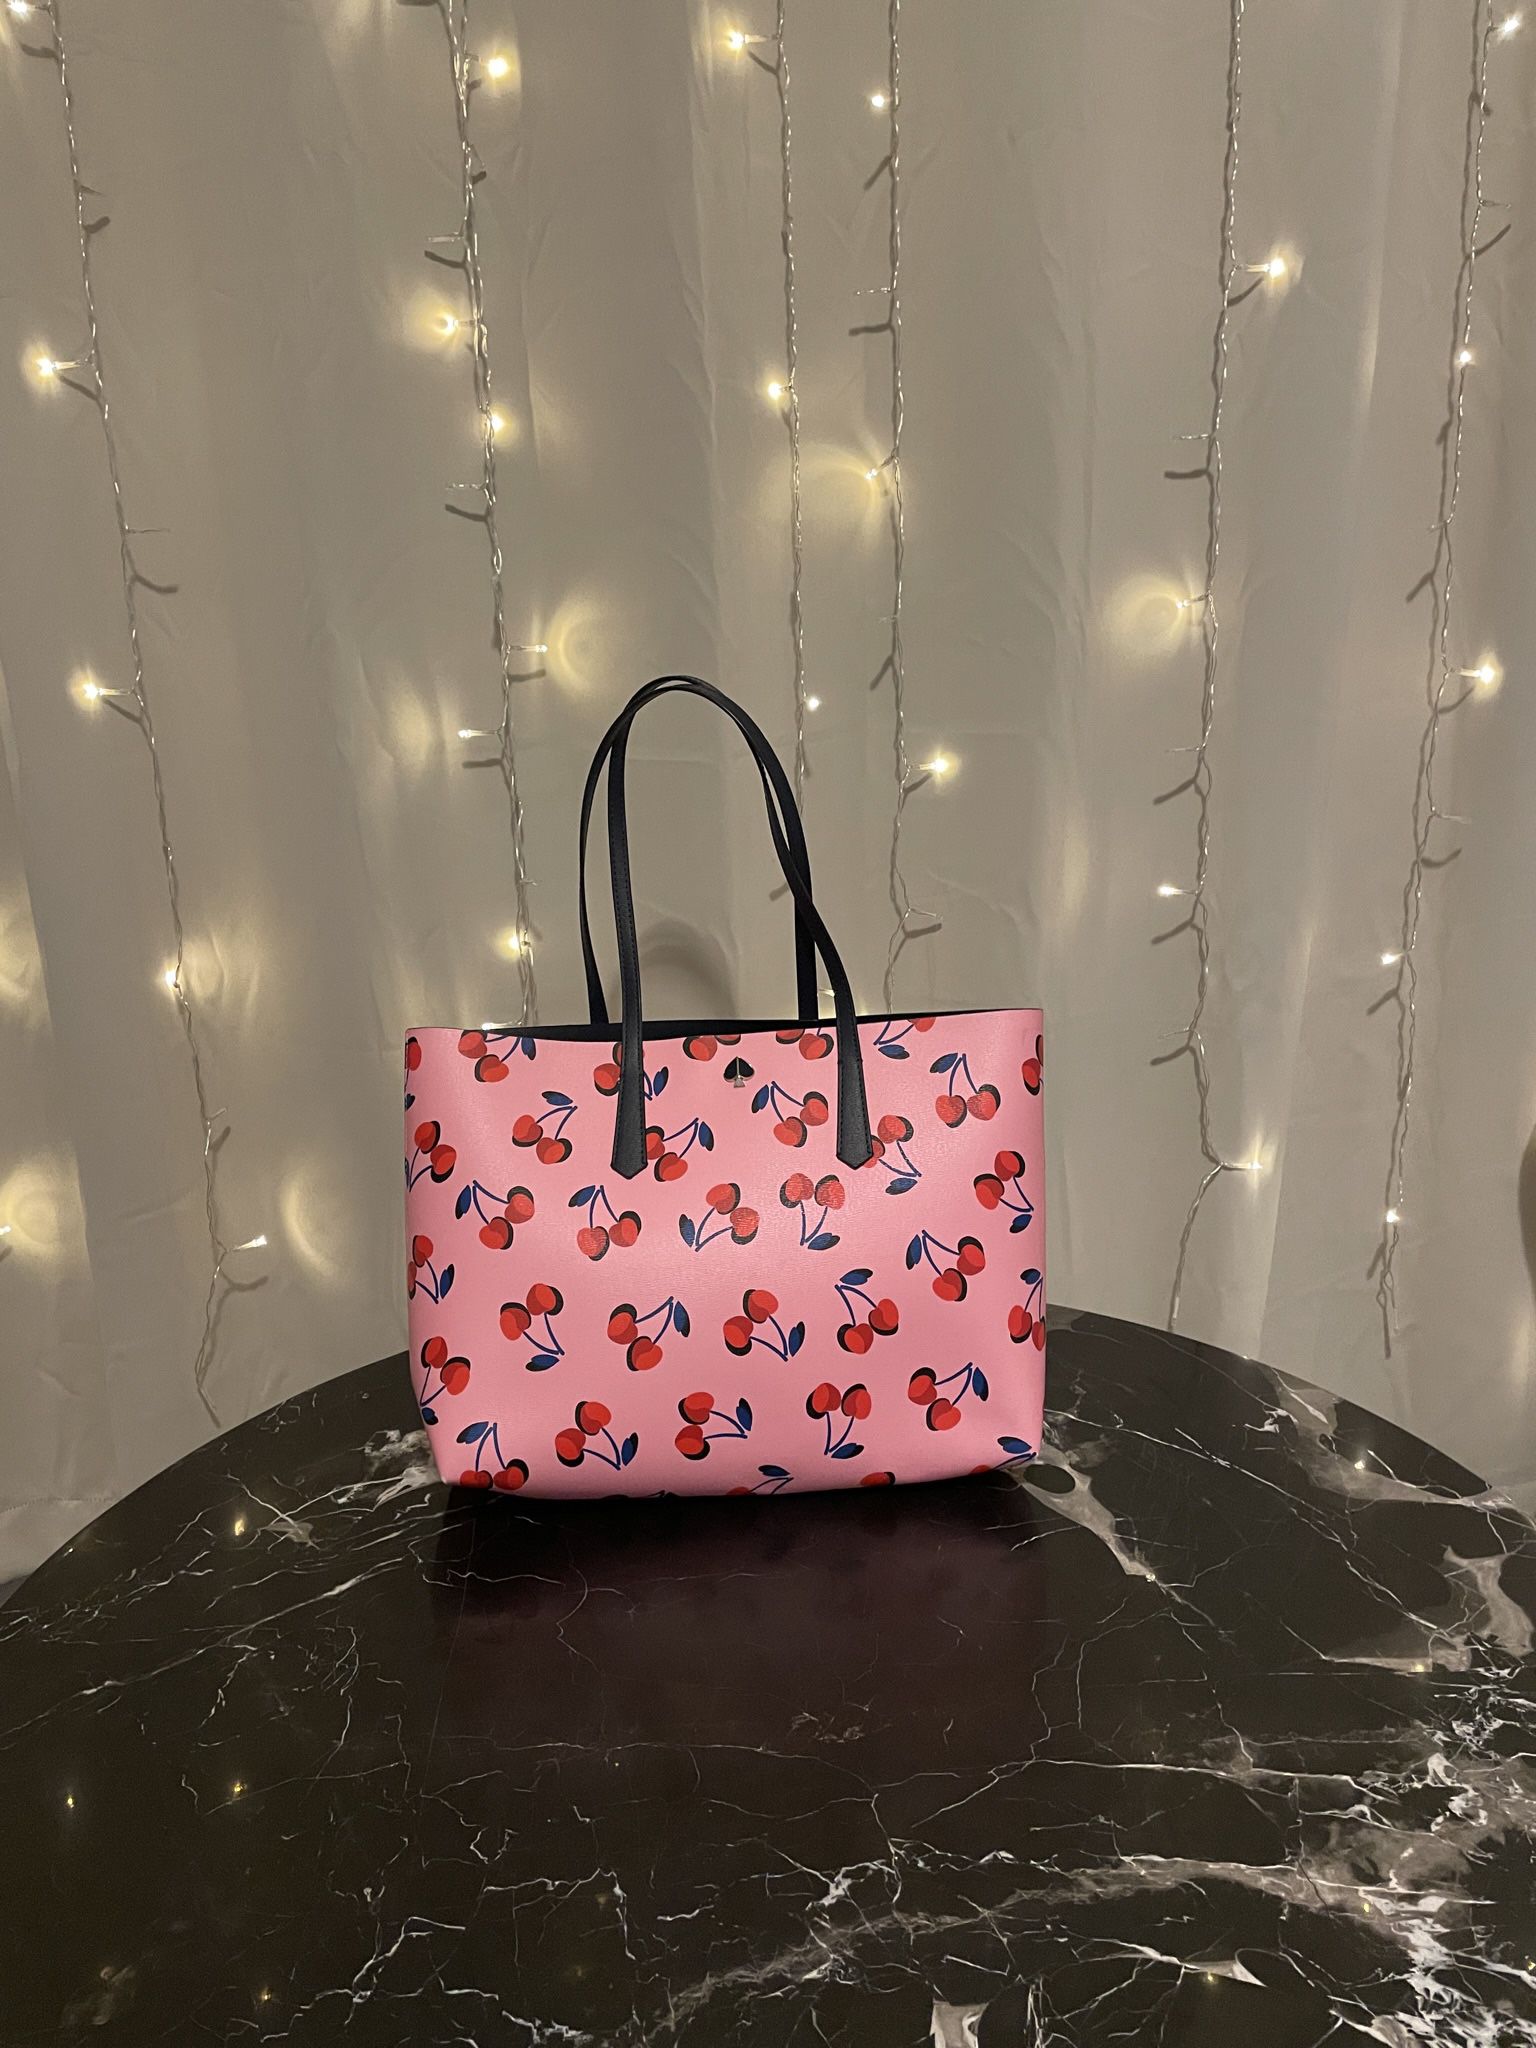 Kate Spade Cherry Print Handbag